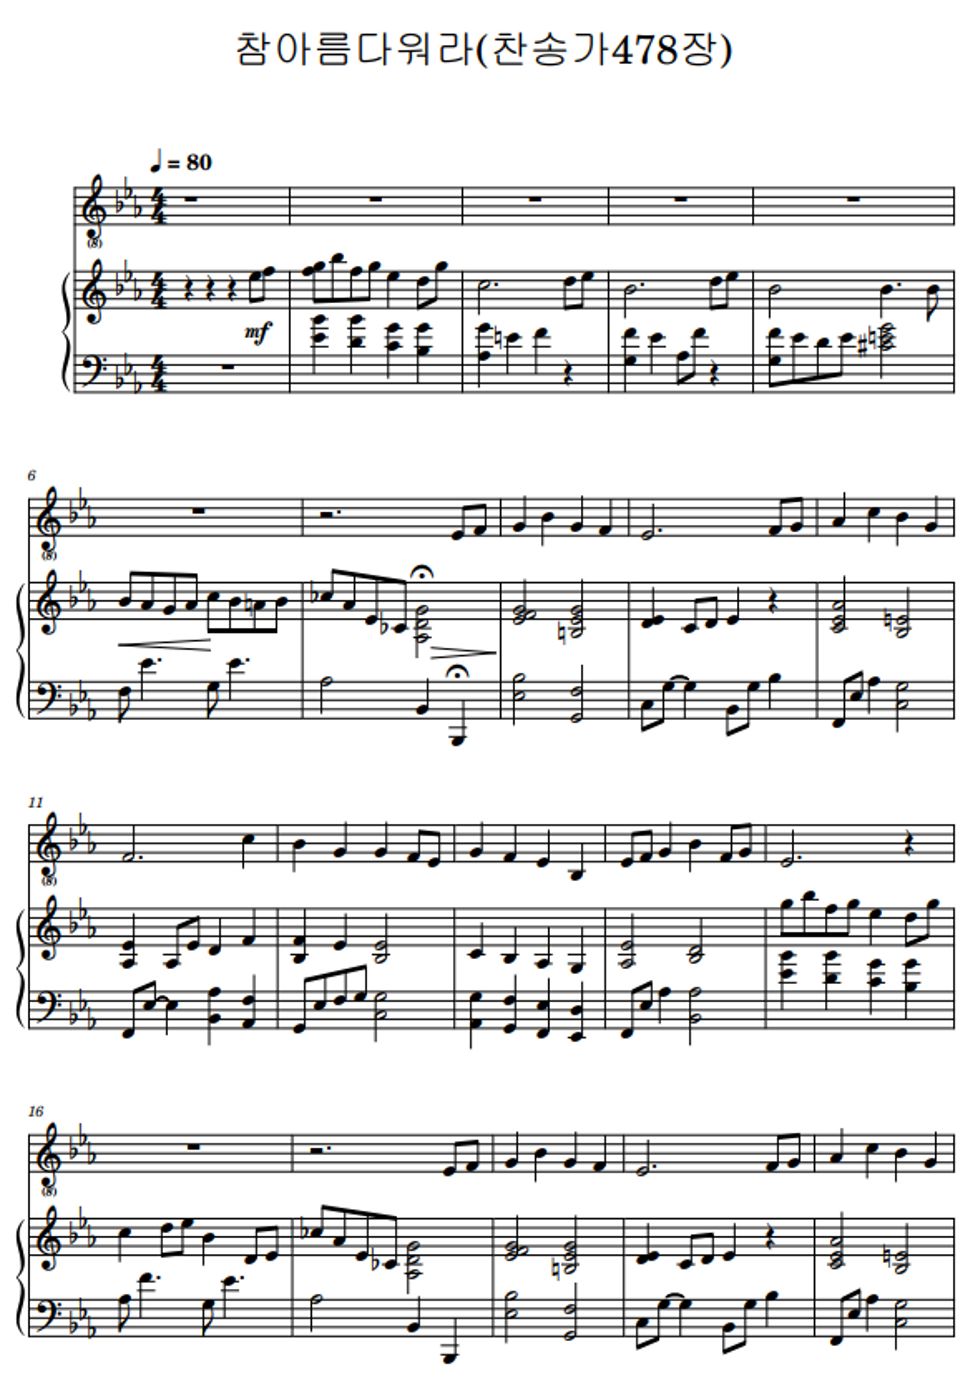 F.L.Sheppard - 참아름다워라(찬송가478장) (Piano&Violin) by Yujin Oh